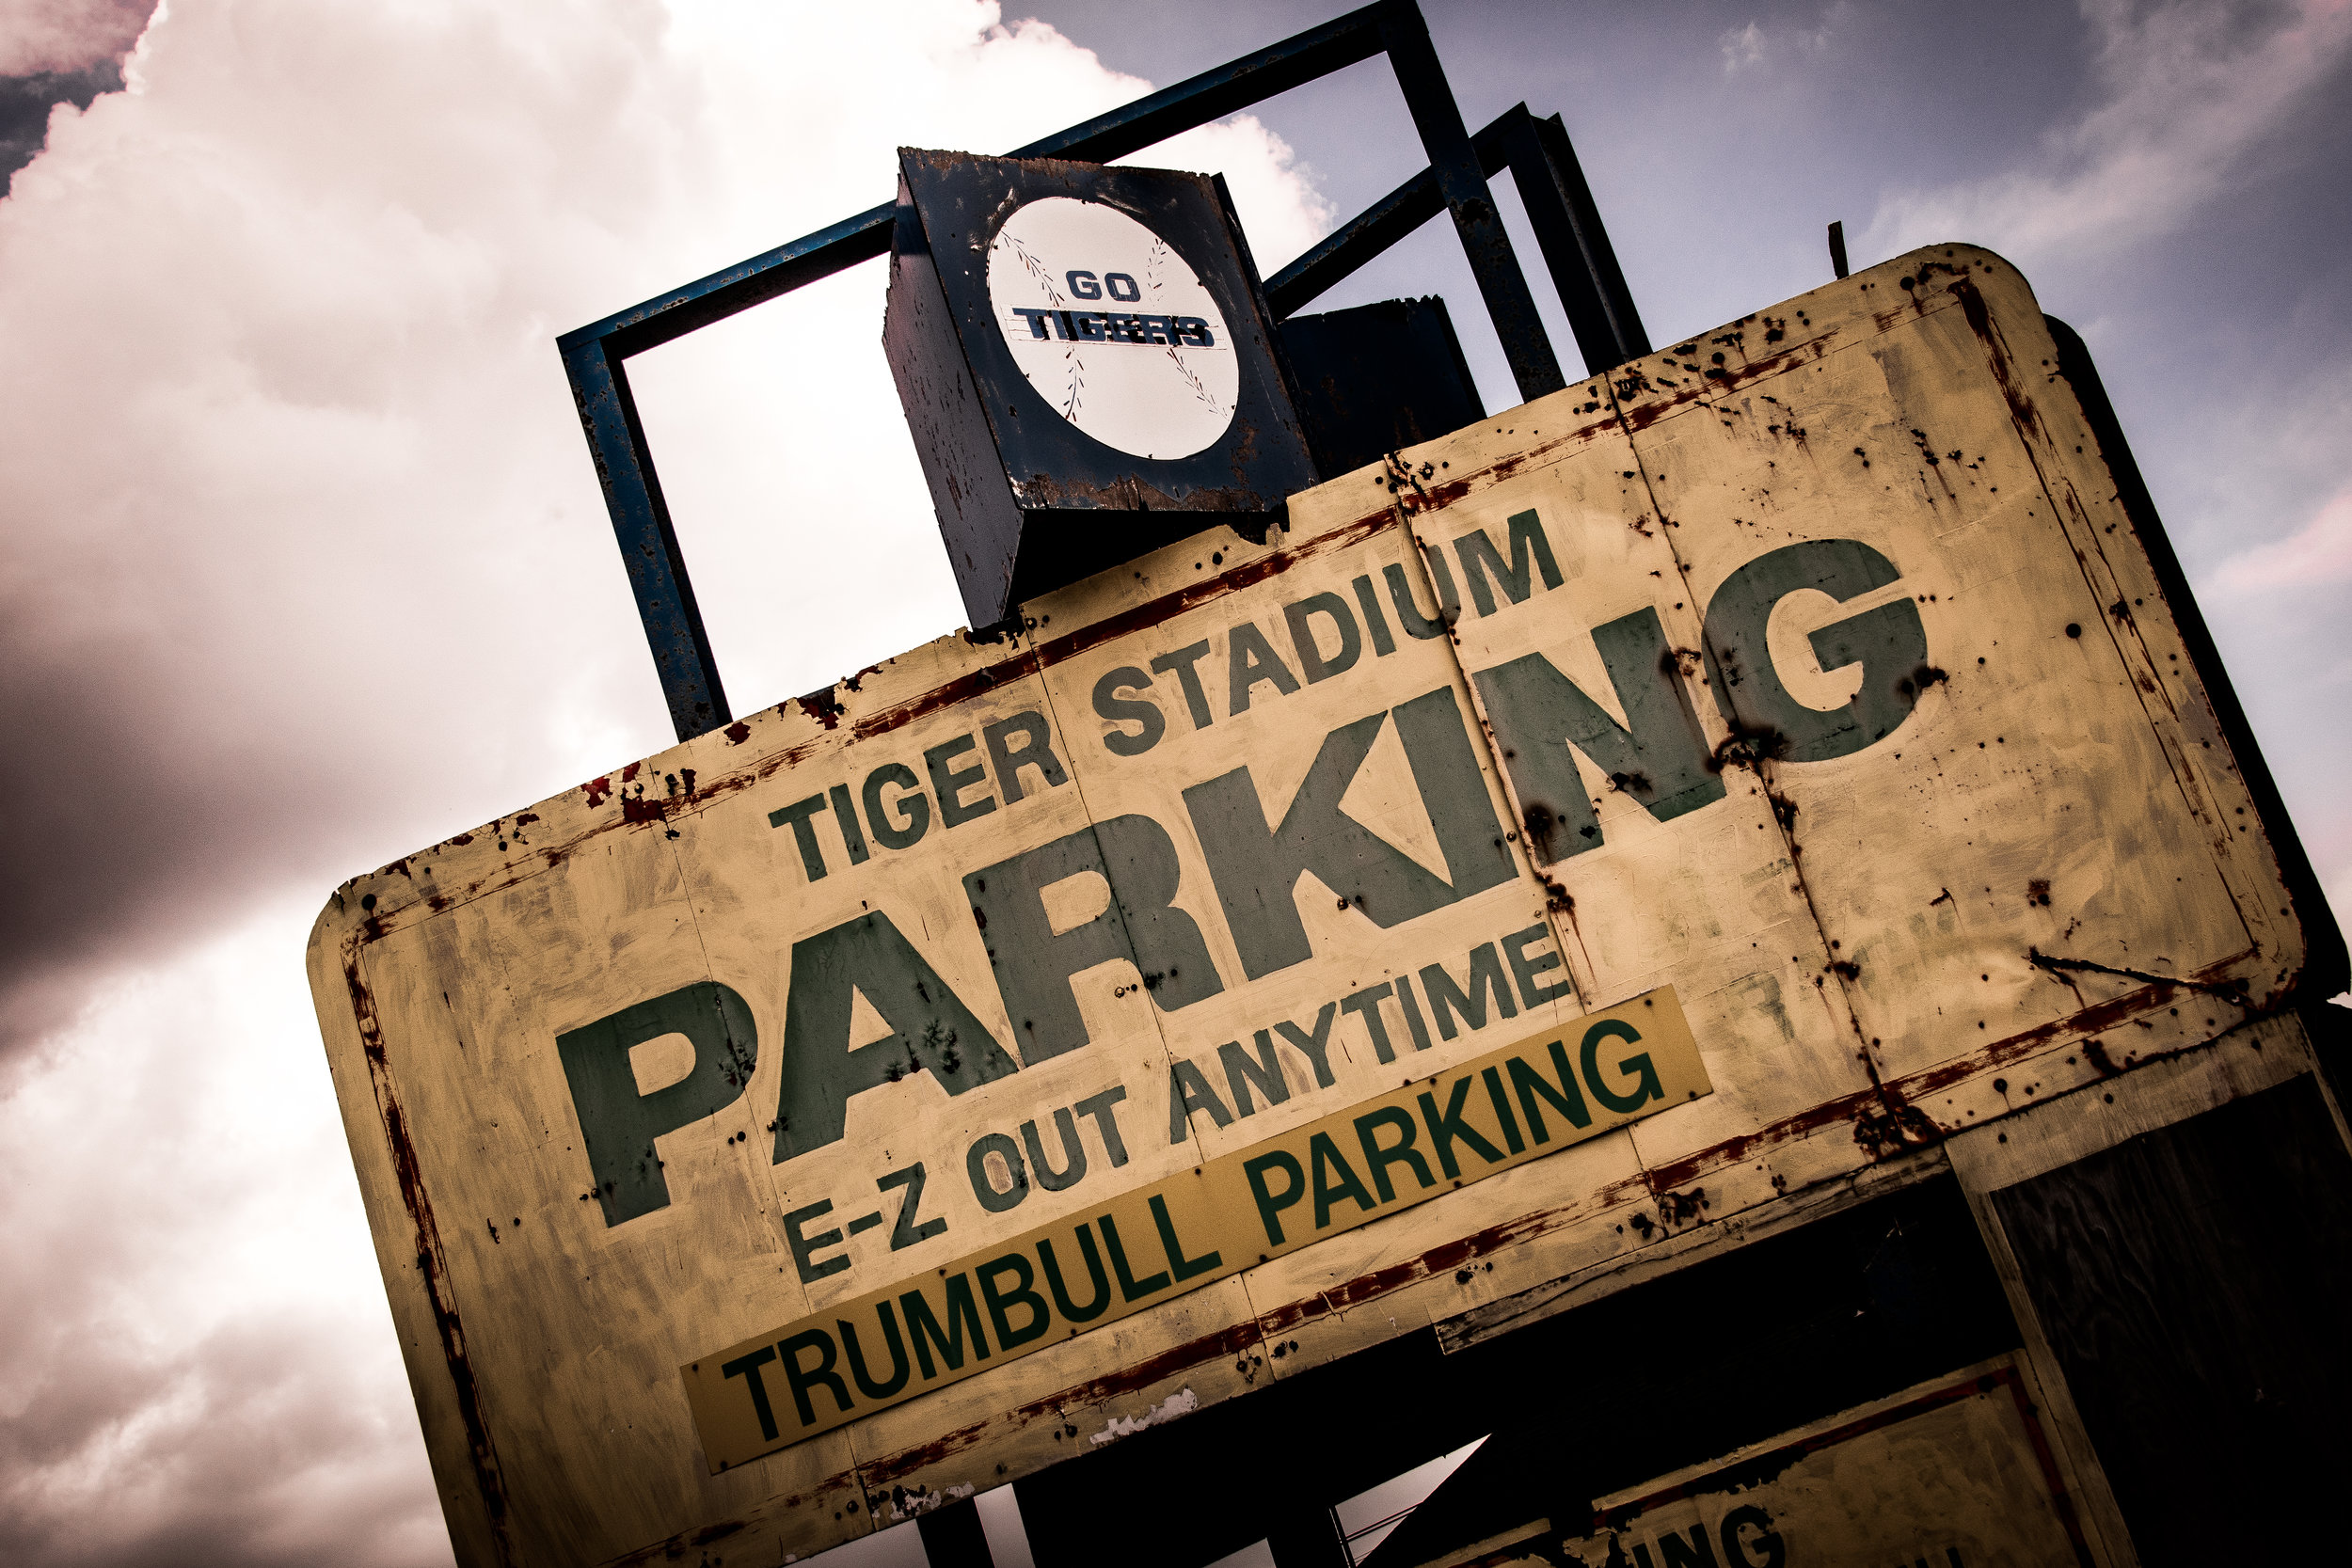 Tiger Stadium Parking Sign